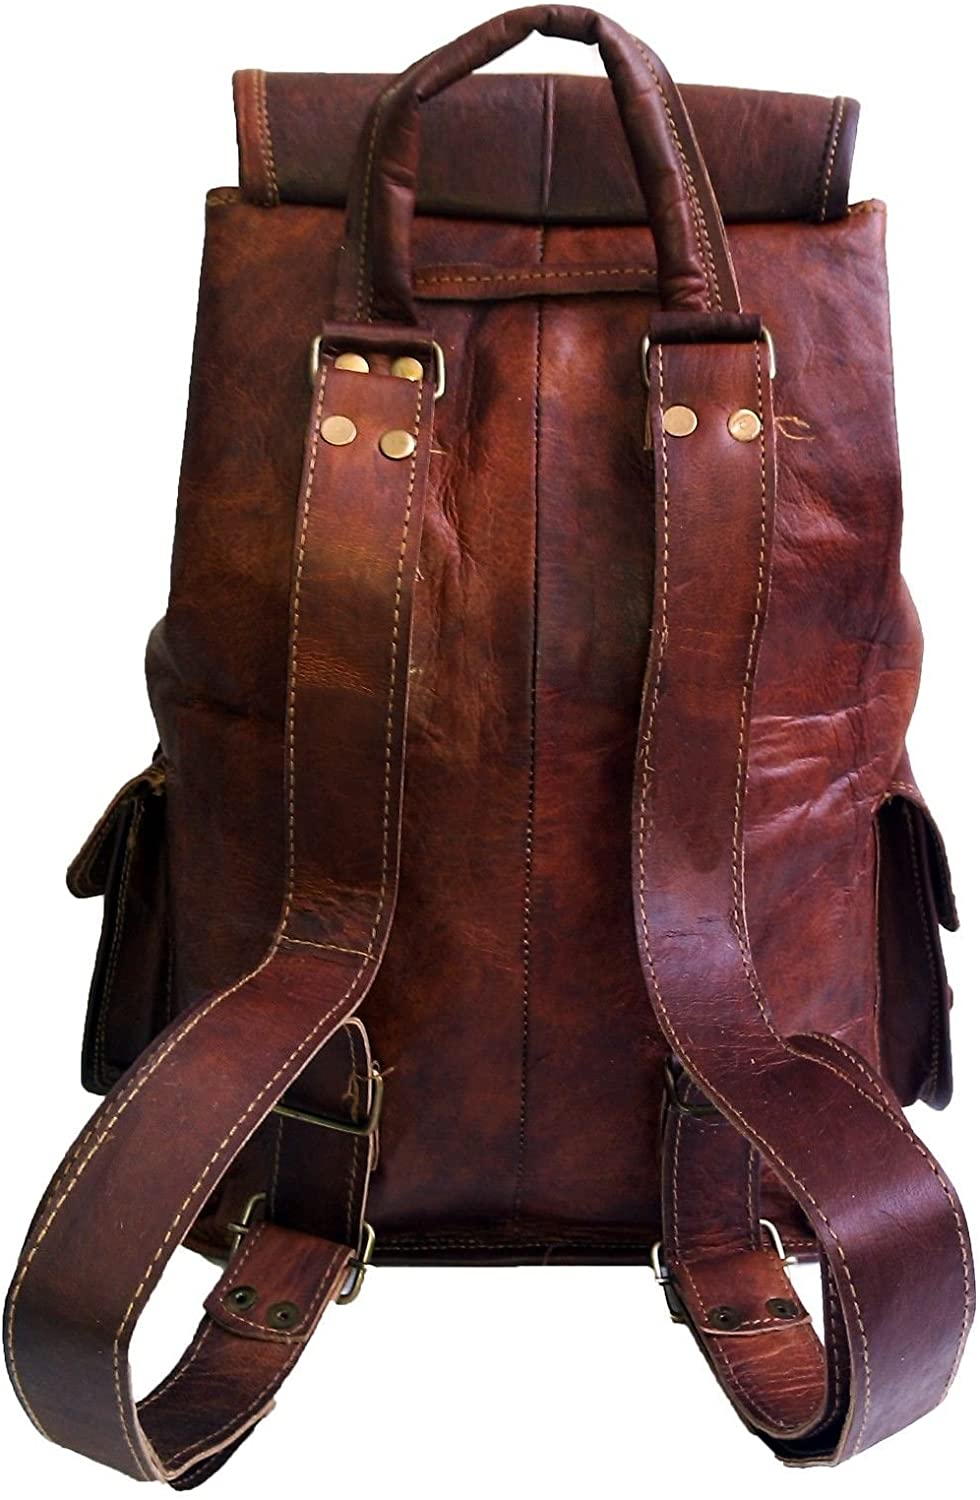 16" Brown Leather Backpack Vintage Rucksack Laptop Bag Water Resistant Casual Daypack College Bookbag Comfortable Lightweight Travel Hiking/Picnic for Men